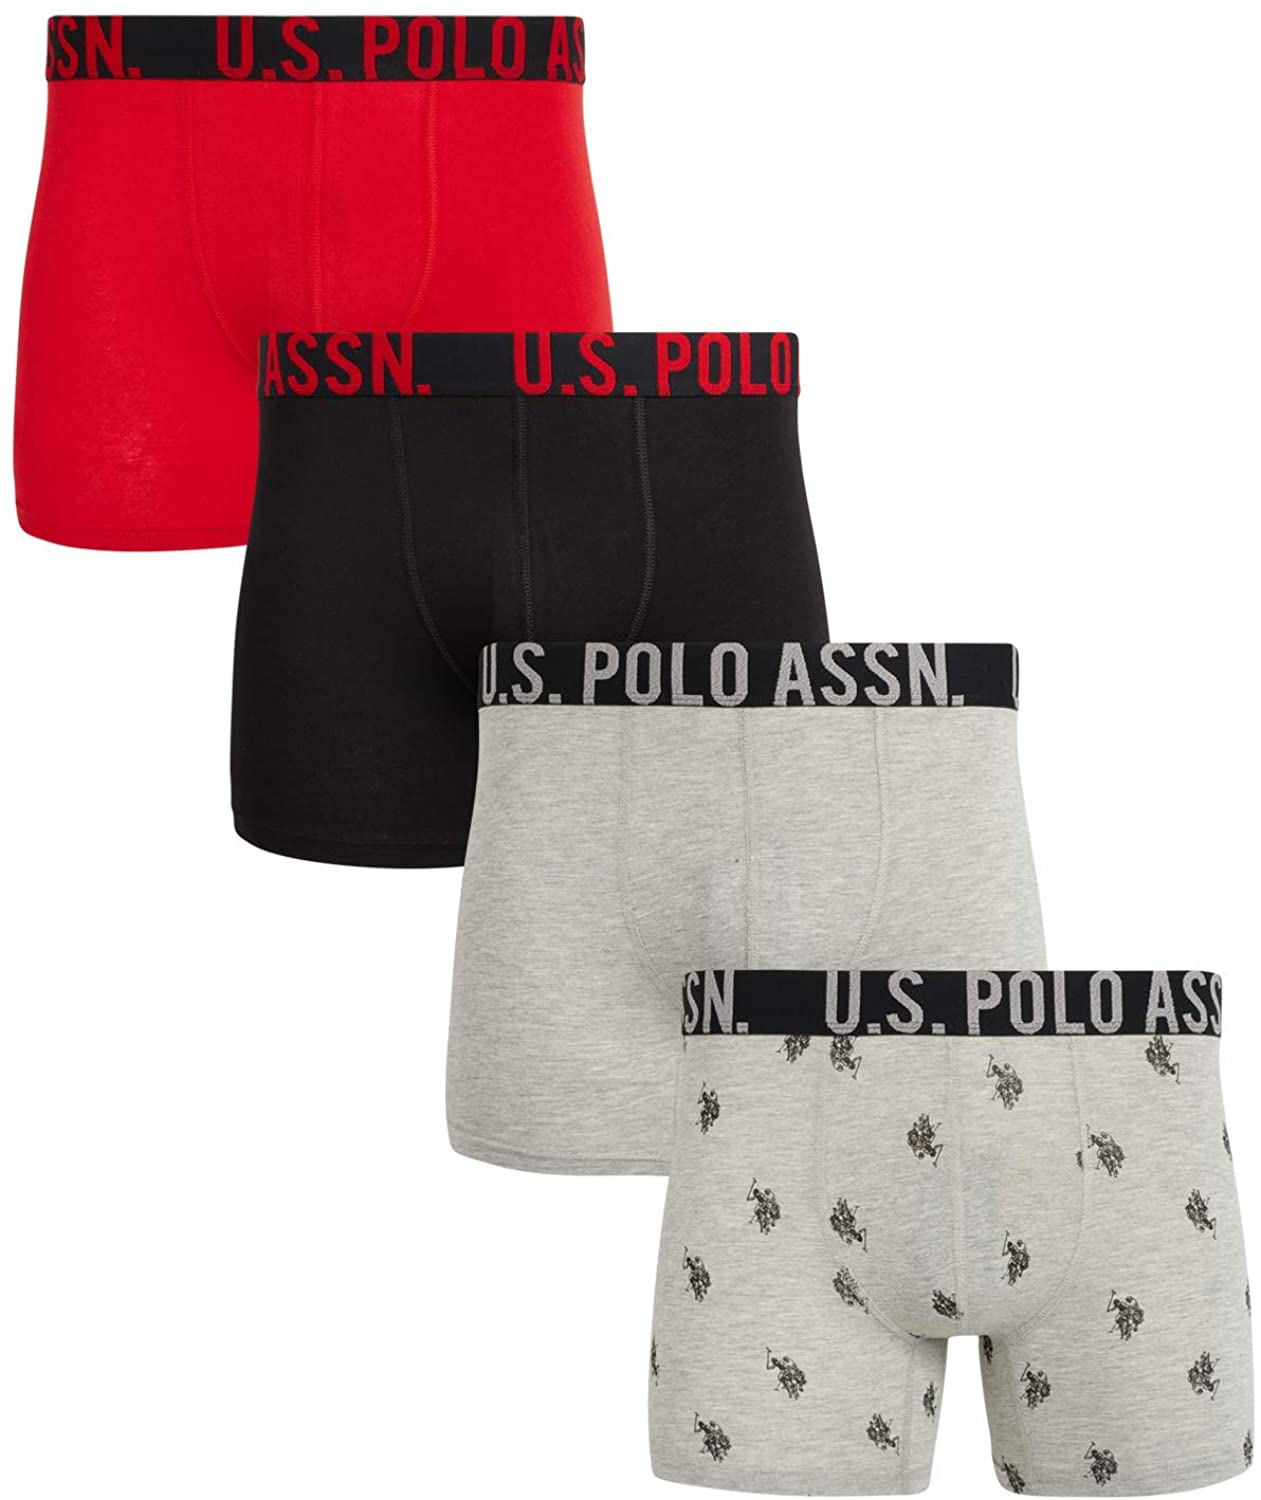 U.S. Polo Assn. Men's Underwear - Ultra Soft Boxer Briefs with